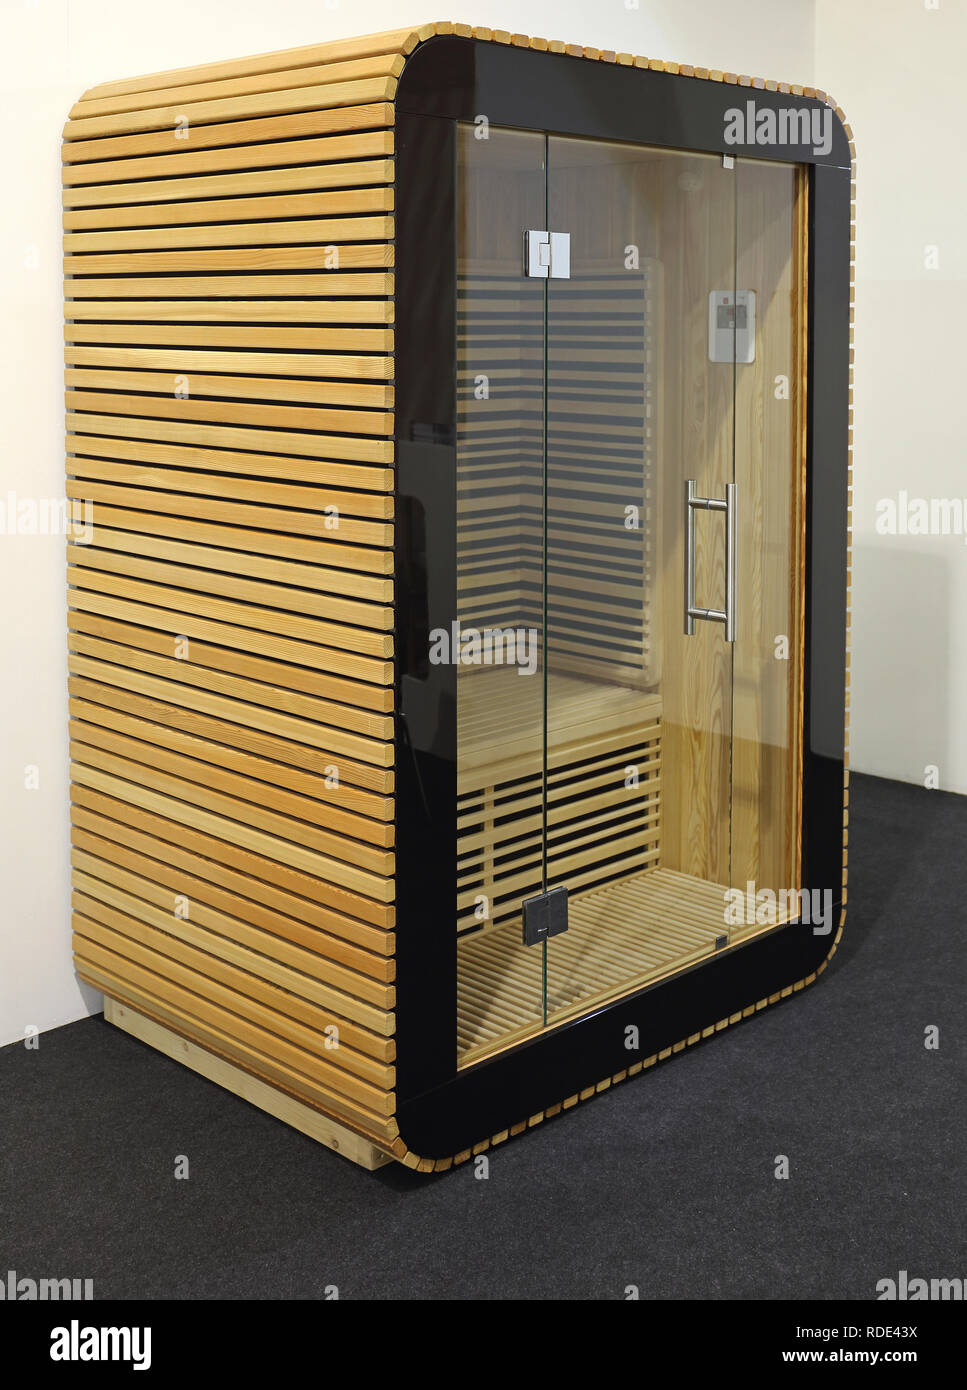 Sauna box hi-res stock photography and images - Alamy